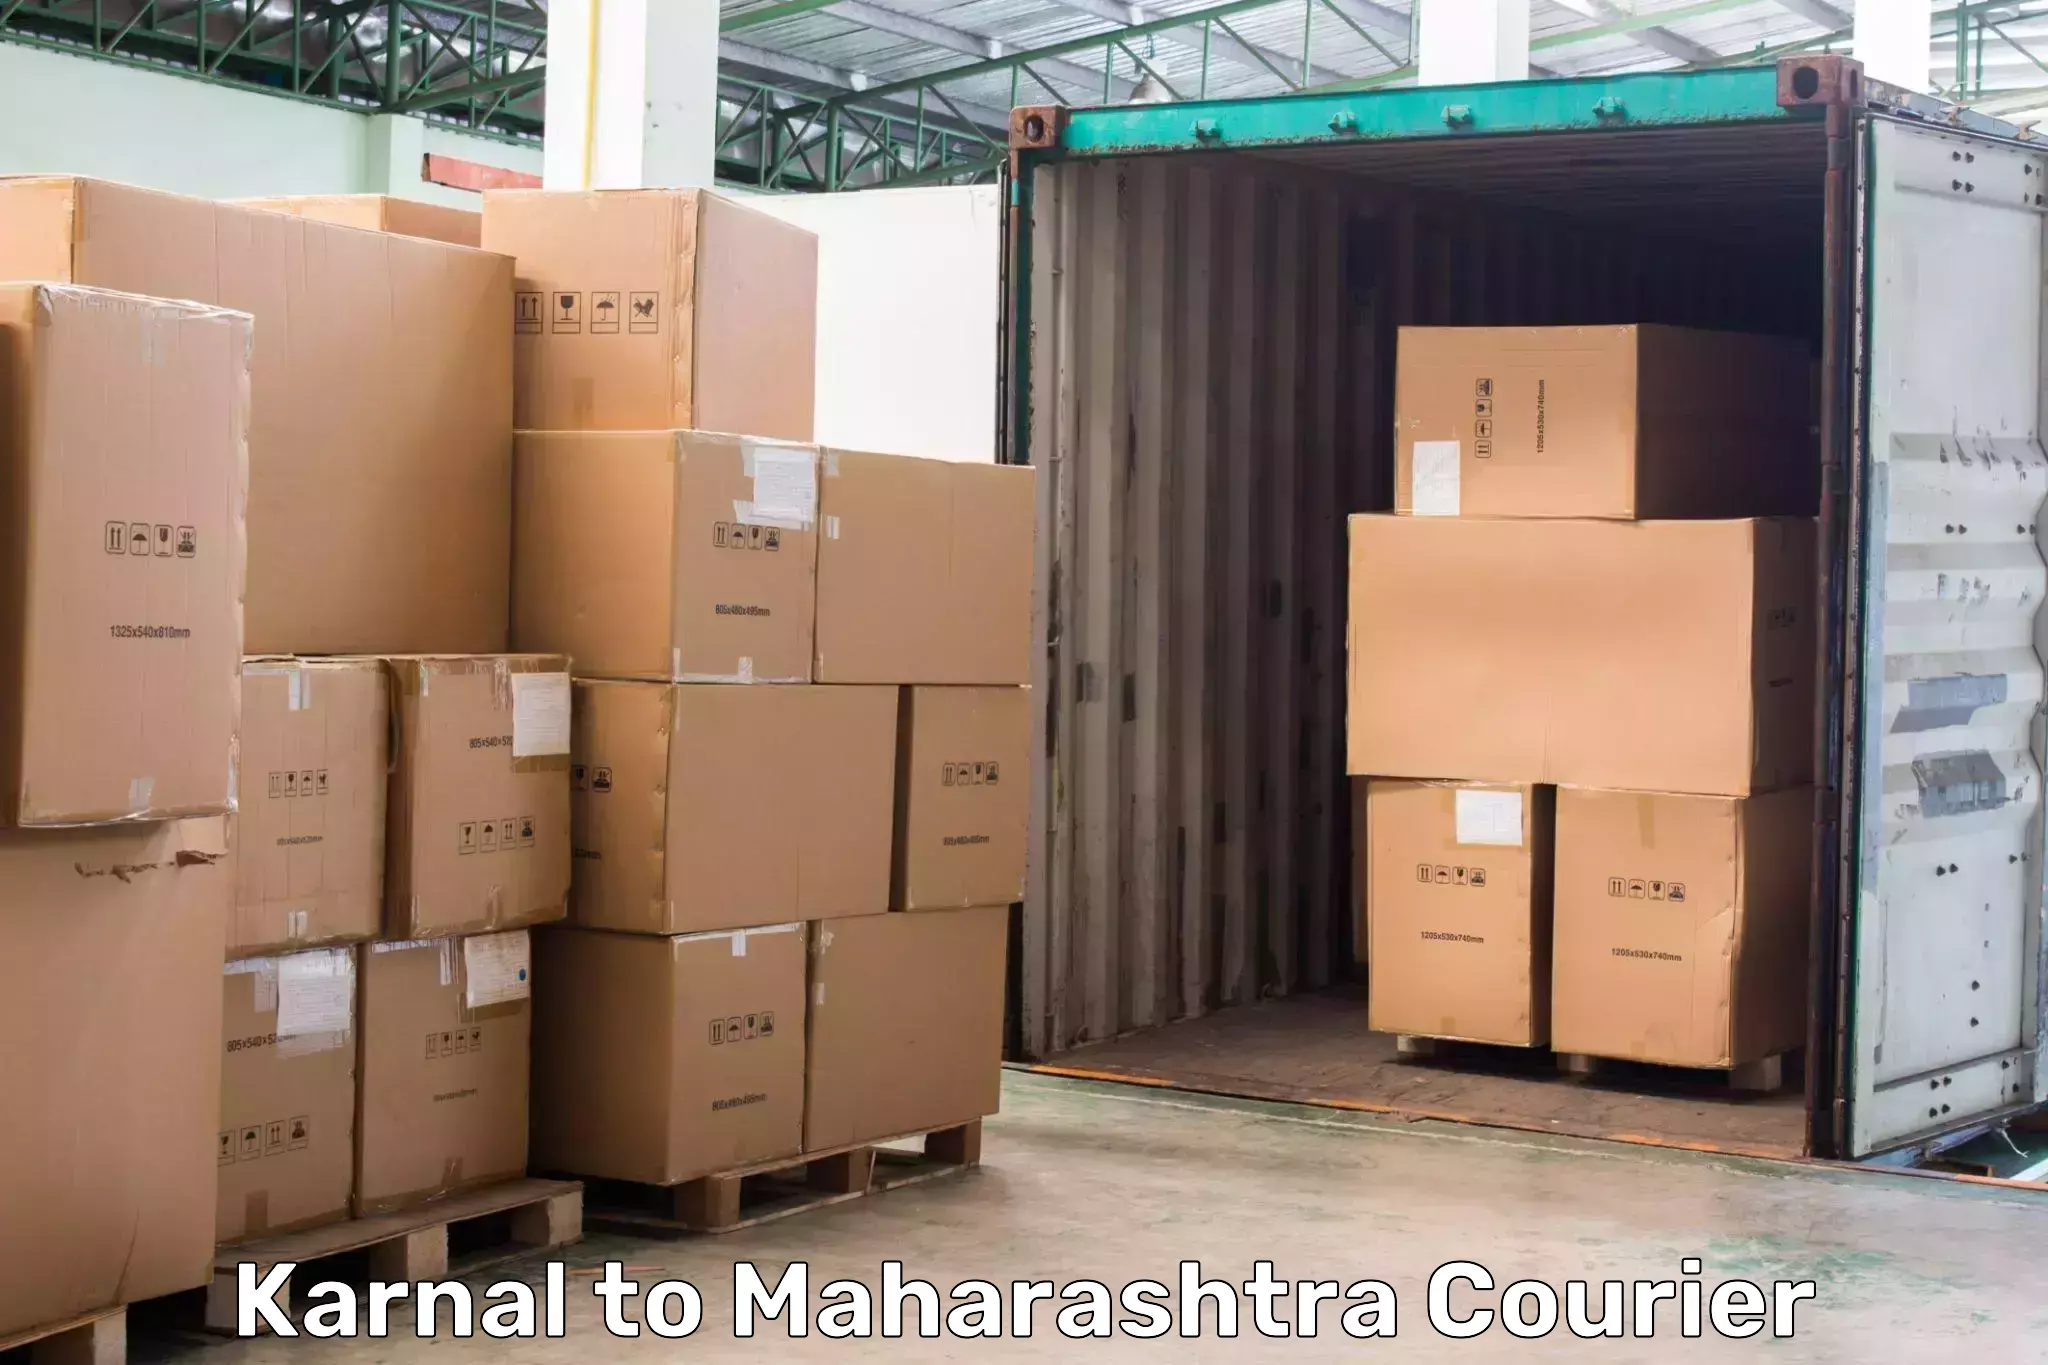 Nationwide shipping capabilities Karnal to Nashik